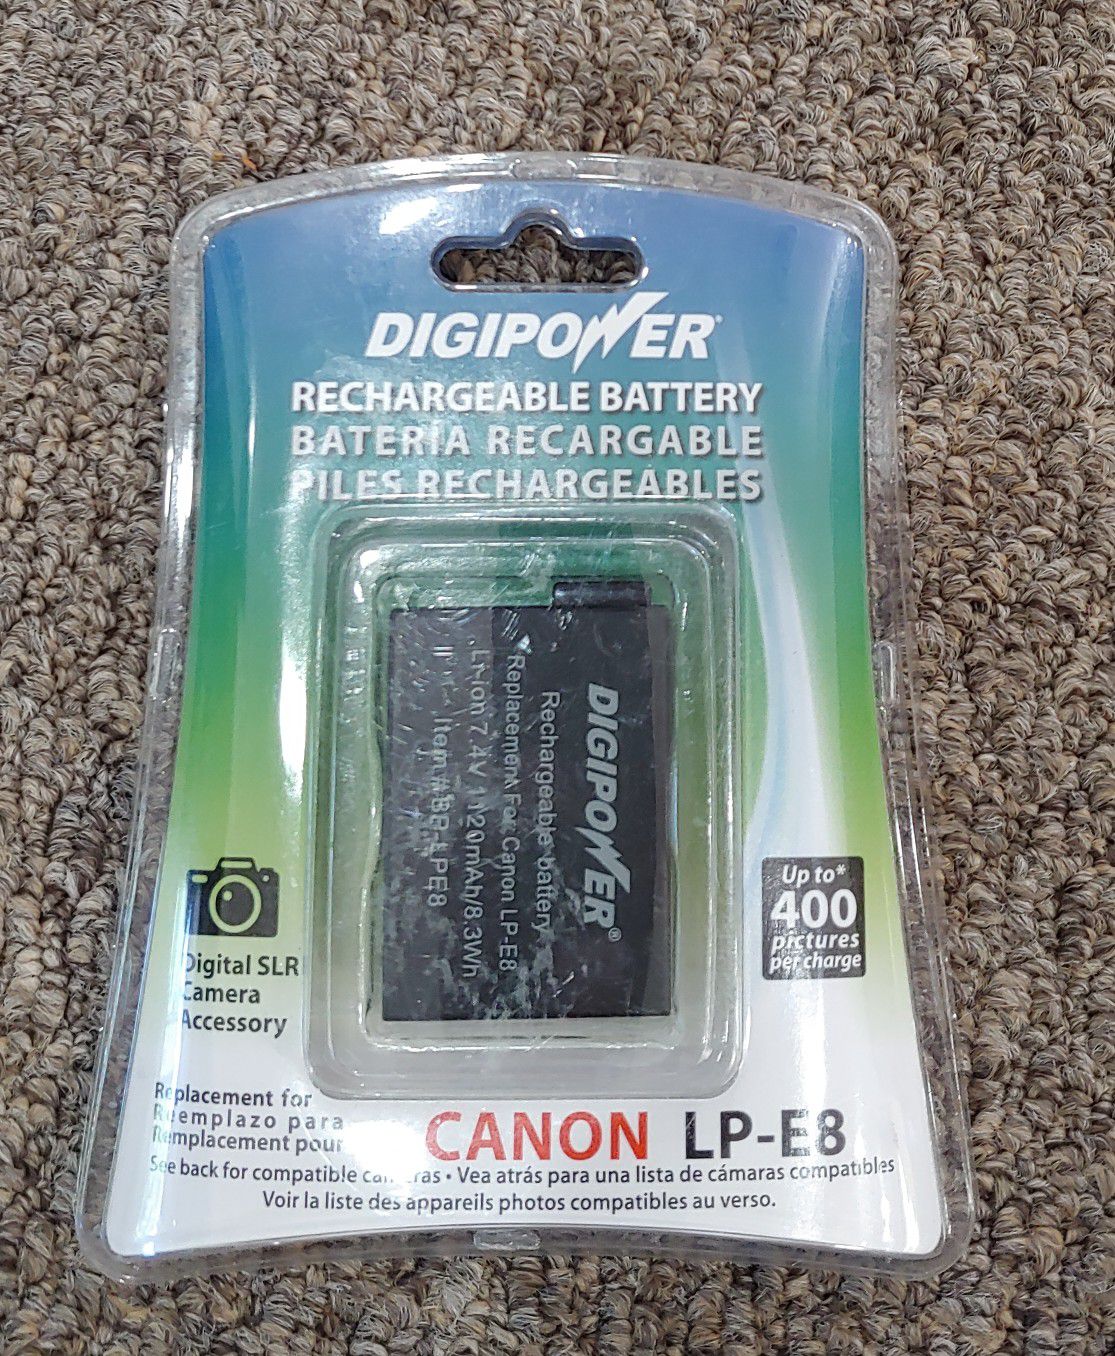 Digipower Rechargeable Battery Canon LP-E8